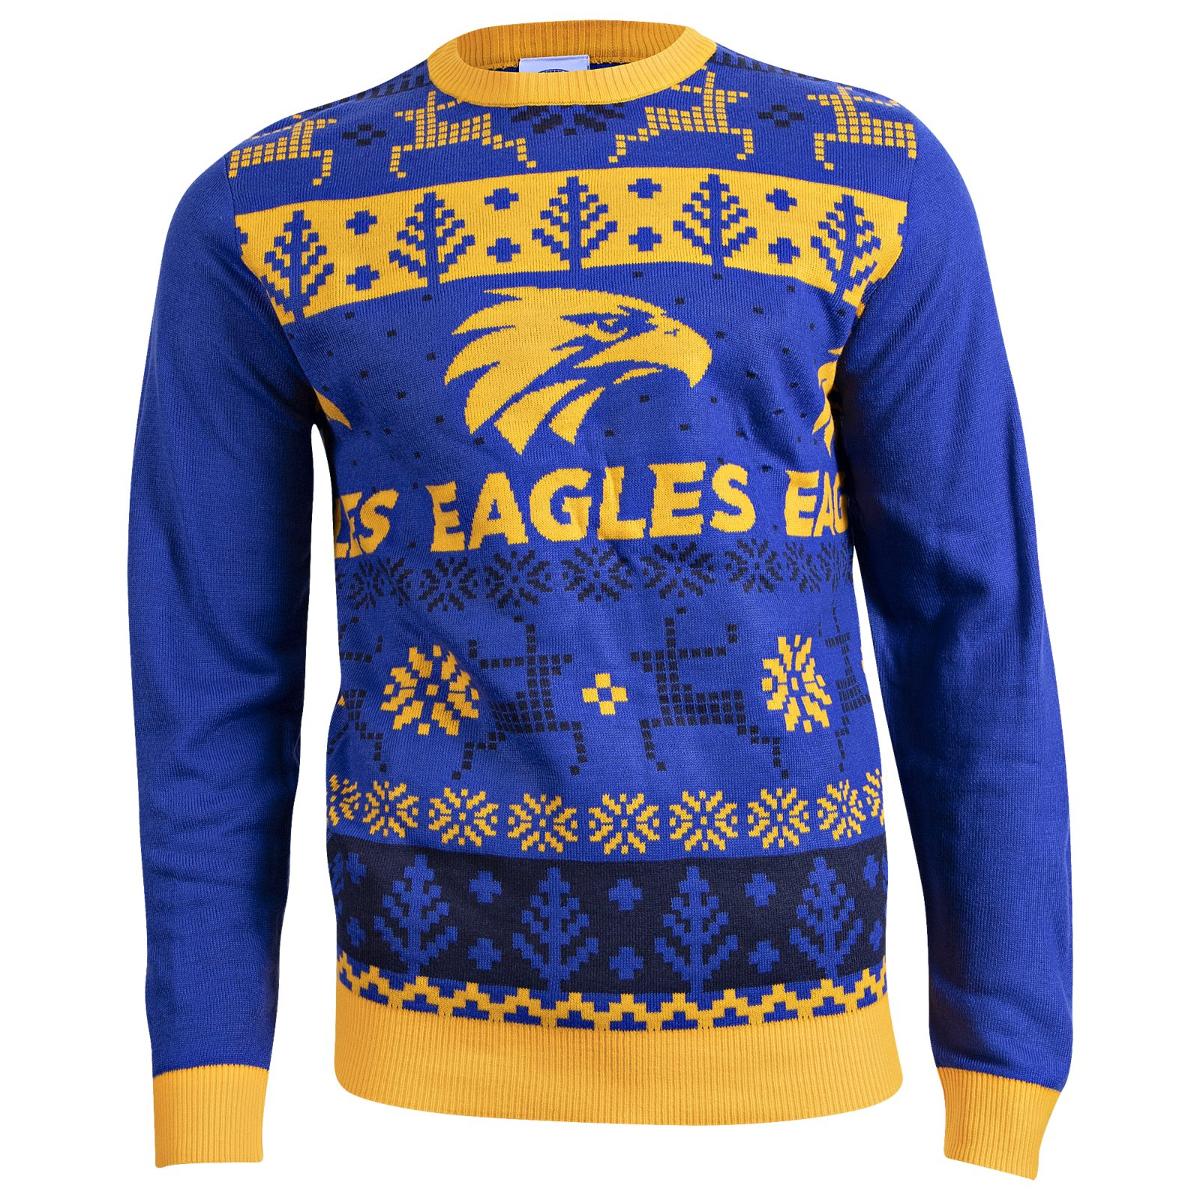 Essendon Bombers Ugly Christmas Sweater